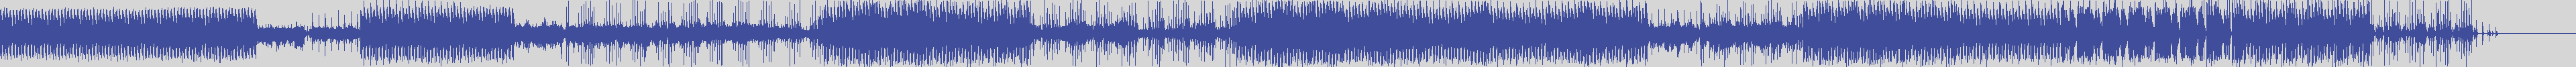 upr [UPR067] Jostronamer - Shadows [Original Mix] audio wave form